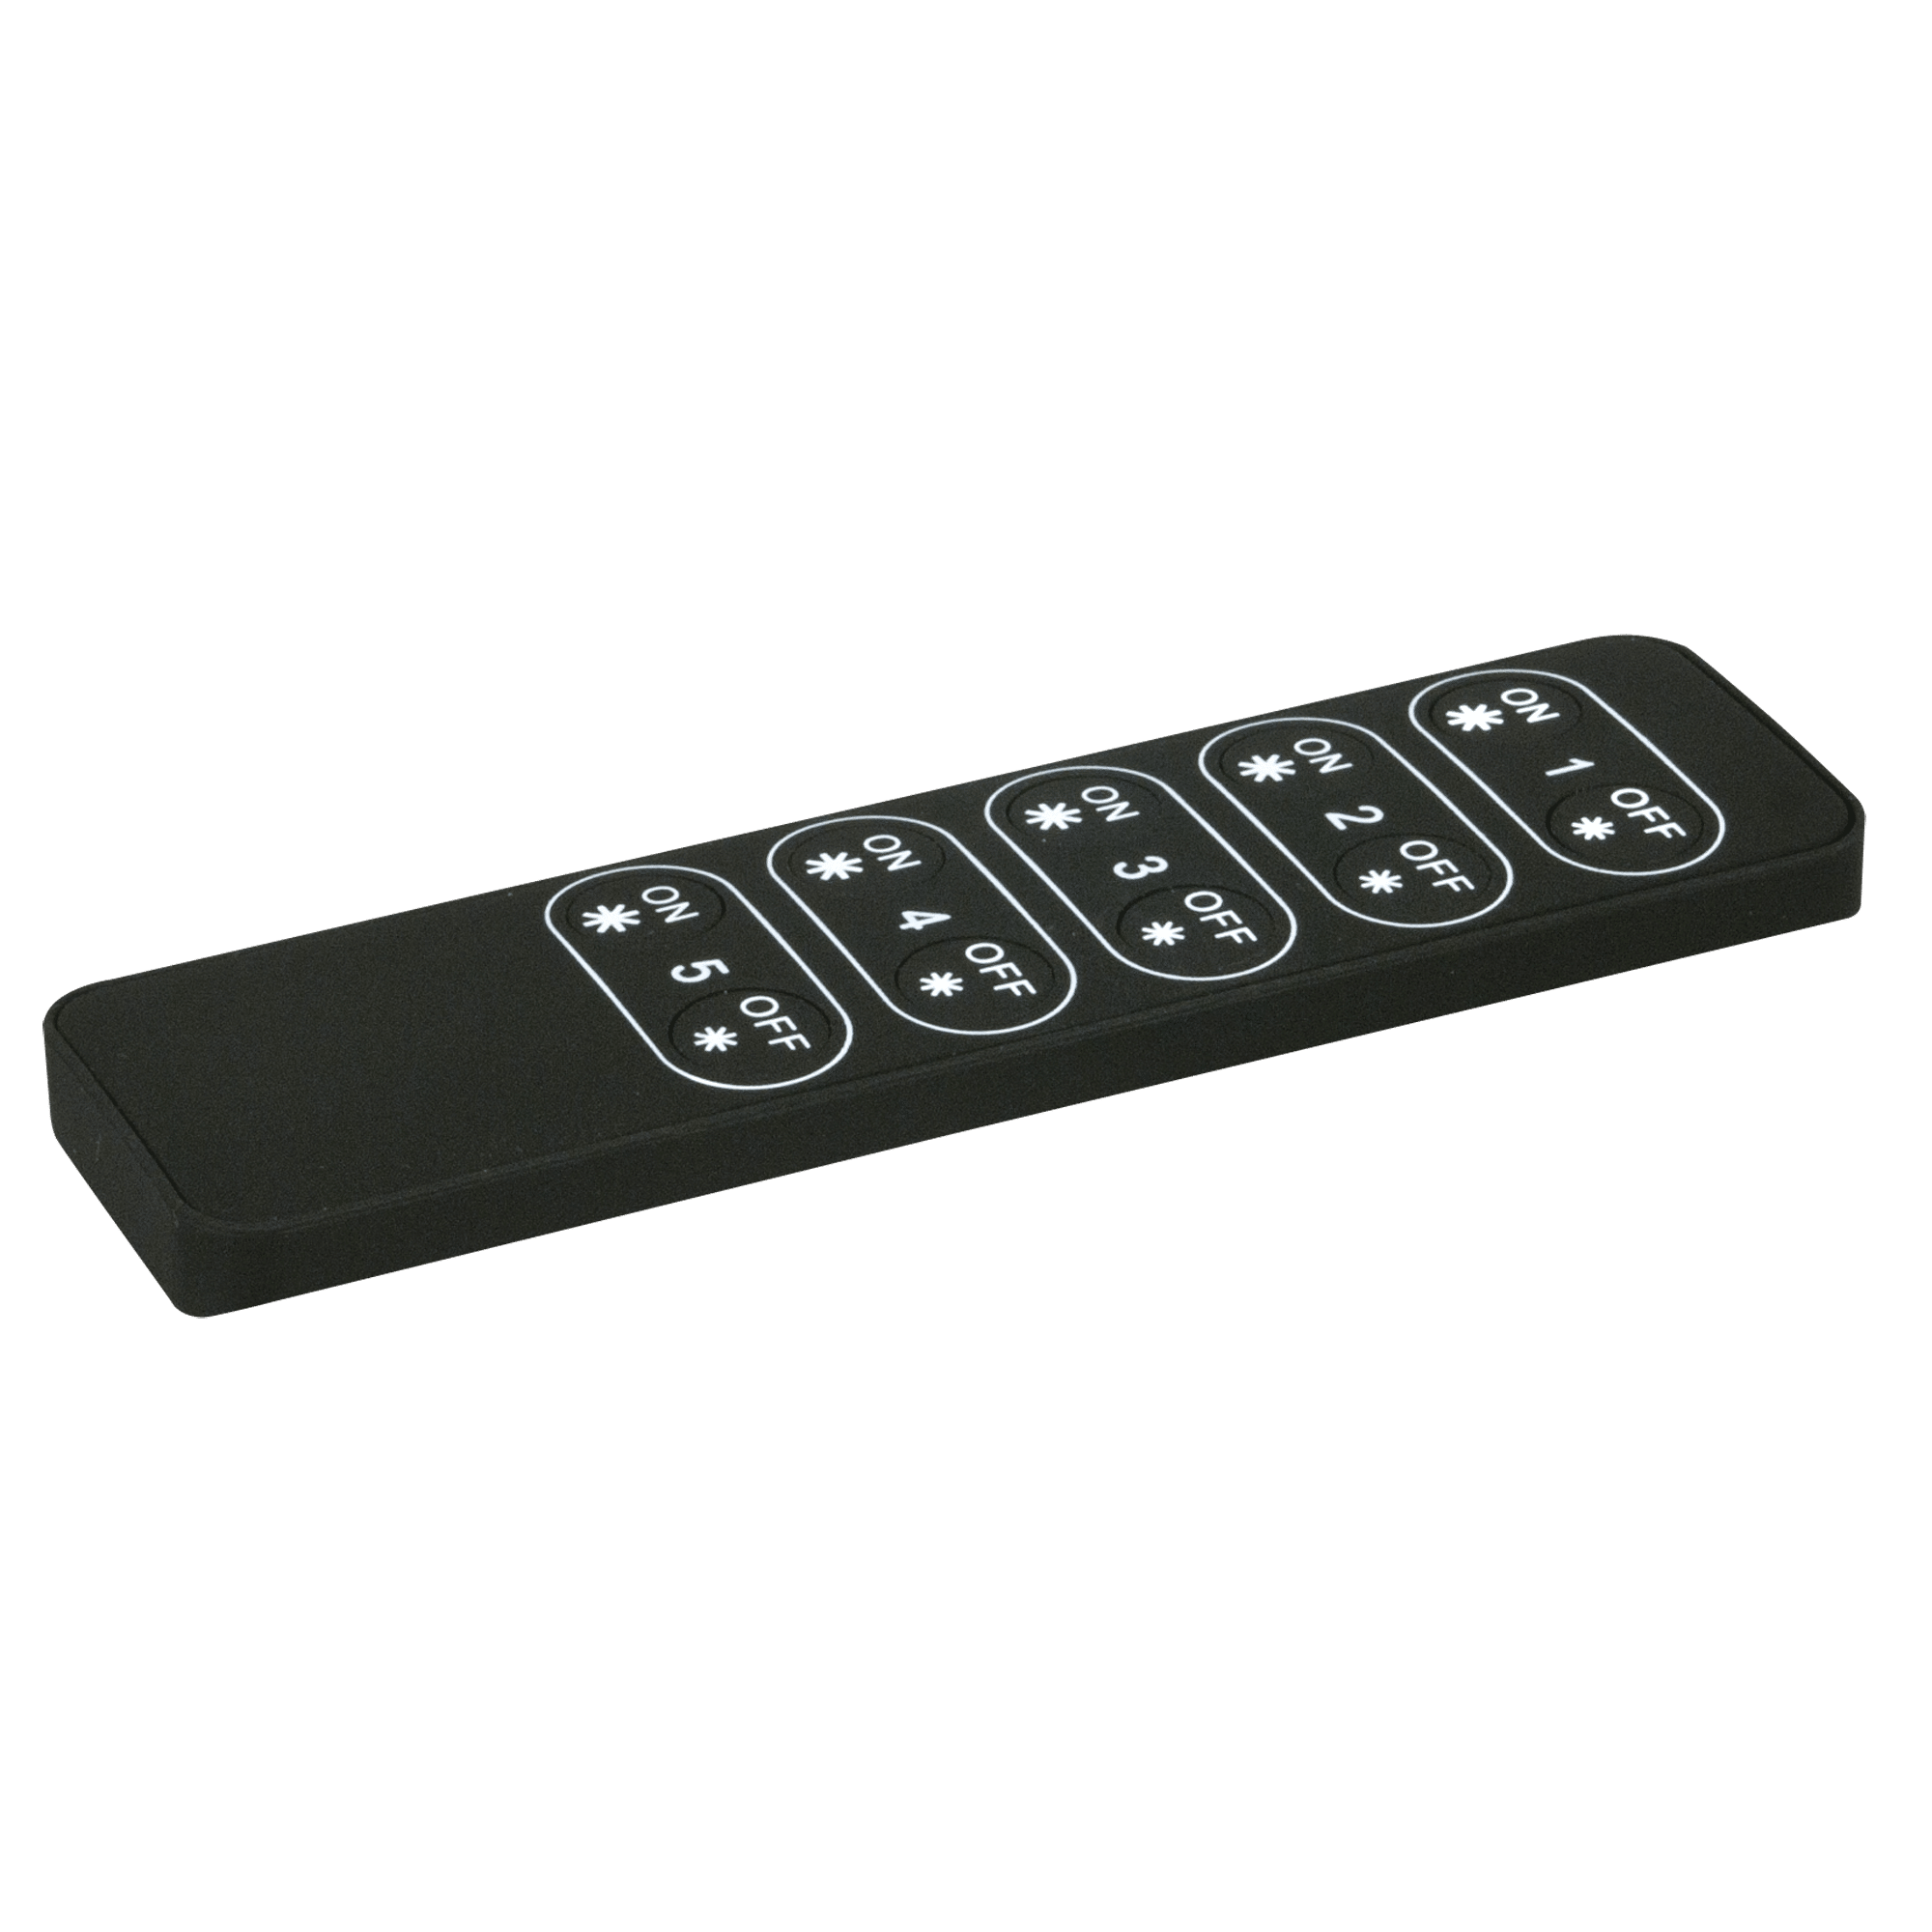 Play-V RF Remote Control - Onlinediscowinkel.nl